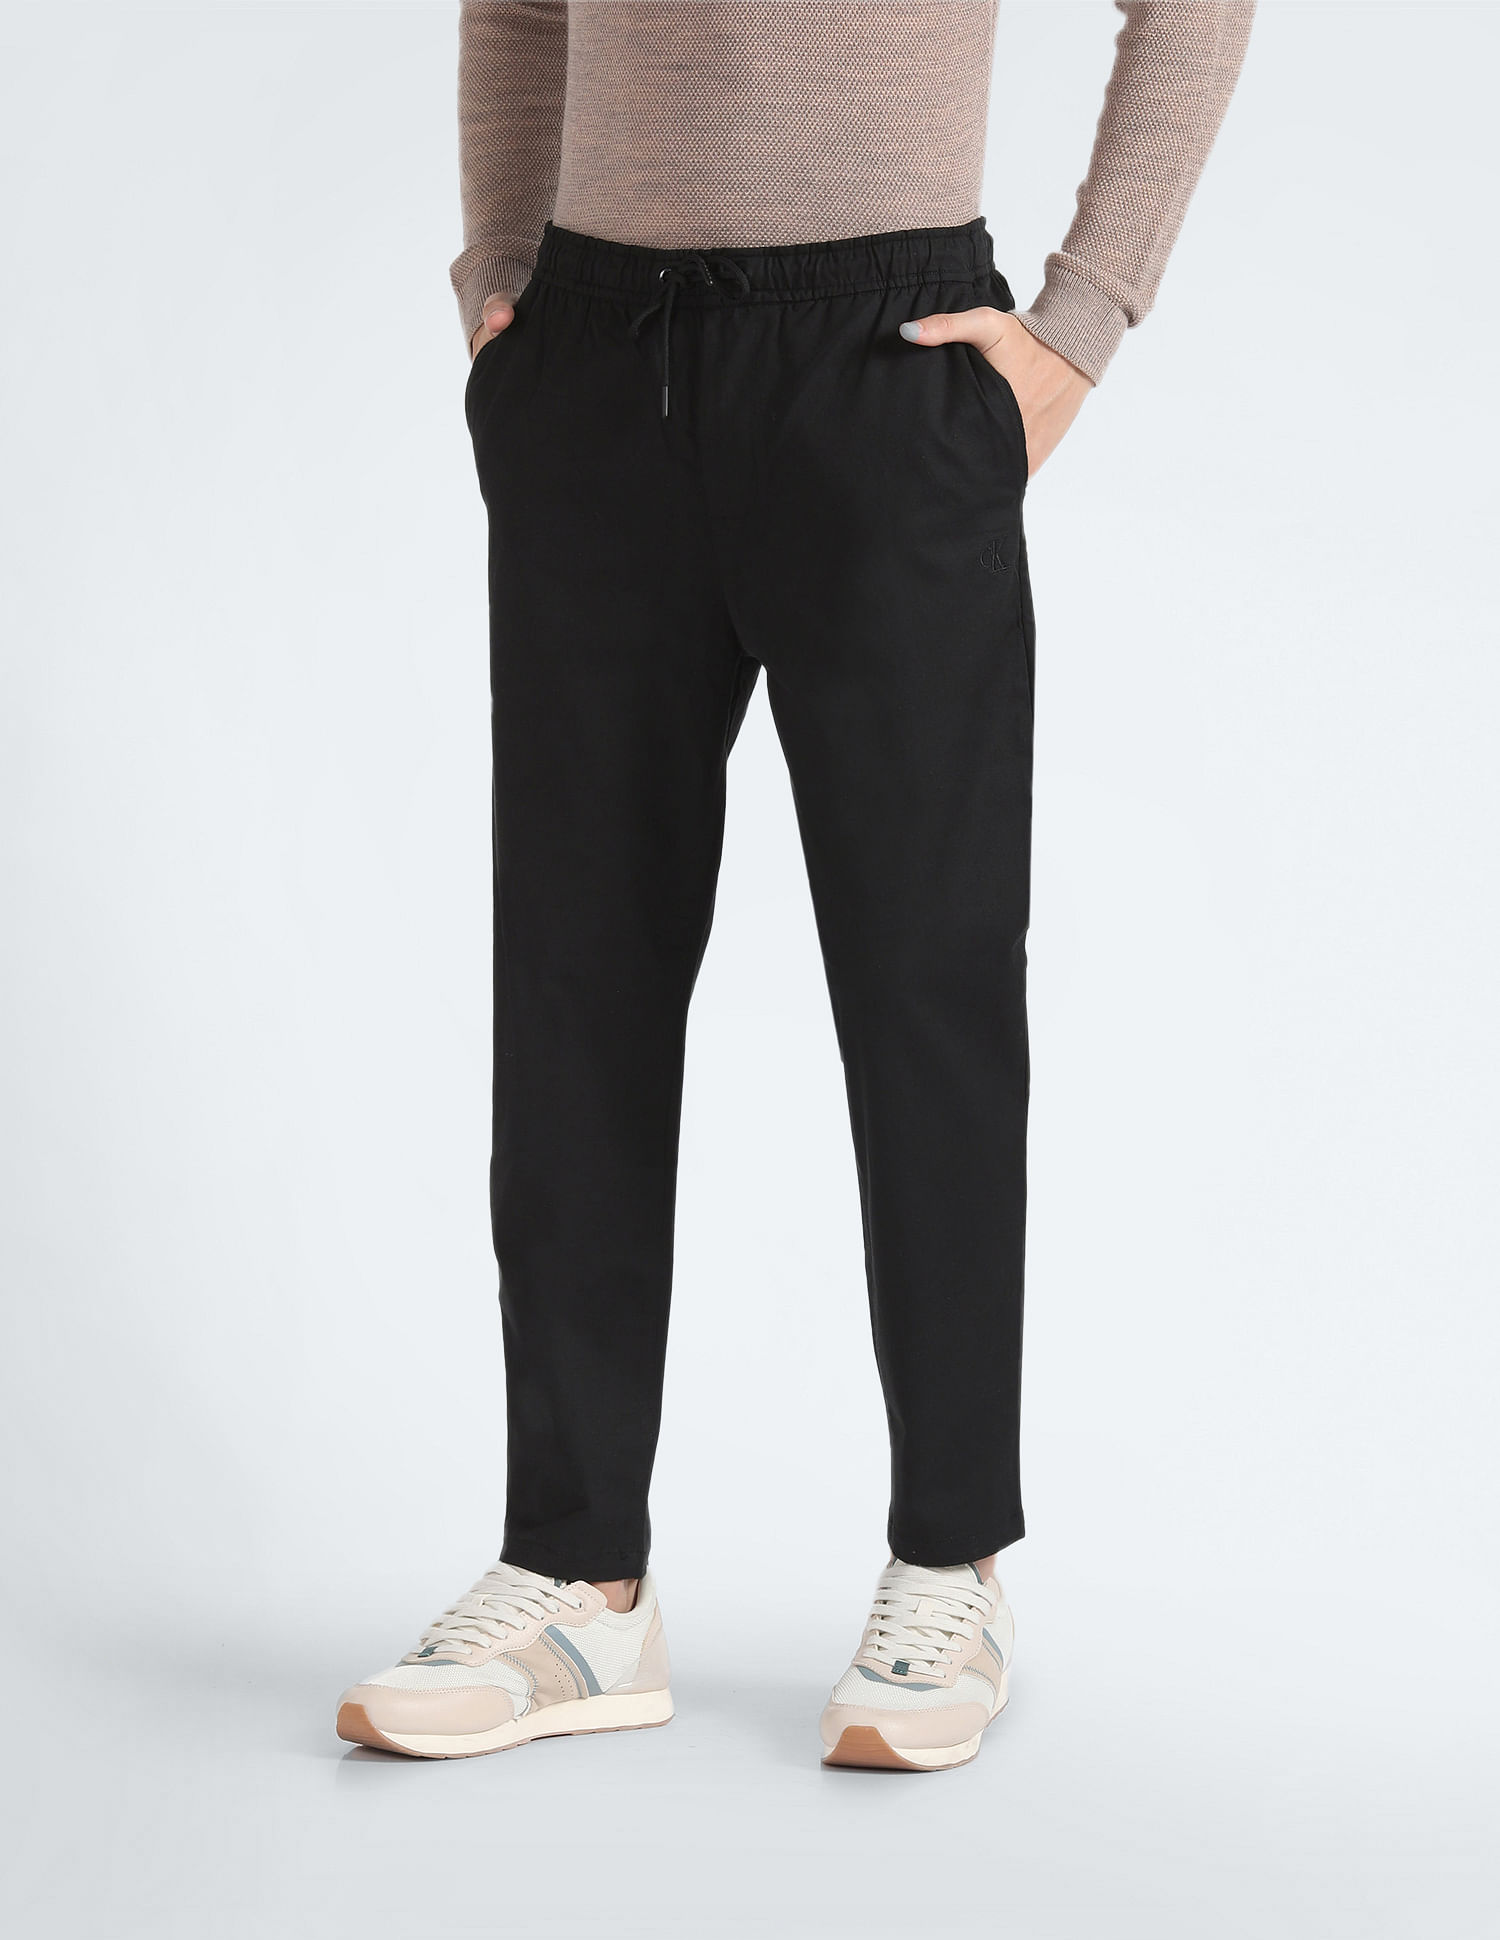 Calvin Klein Plus Size Trousers Pant Women Color LUGGAGE Size 14W | Pants  for women, Trouser pants women, Calvin klein plus size